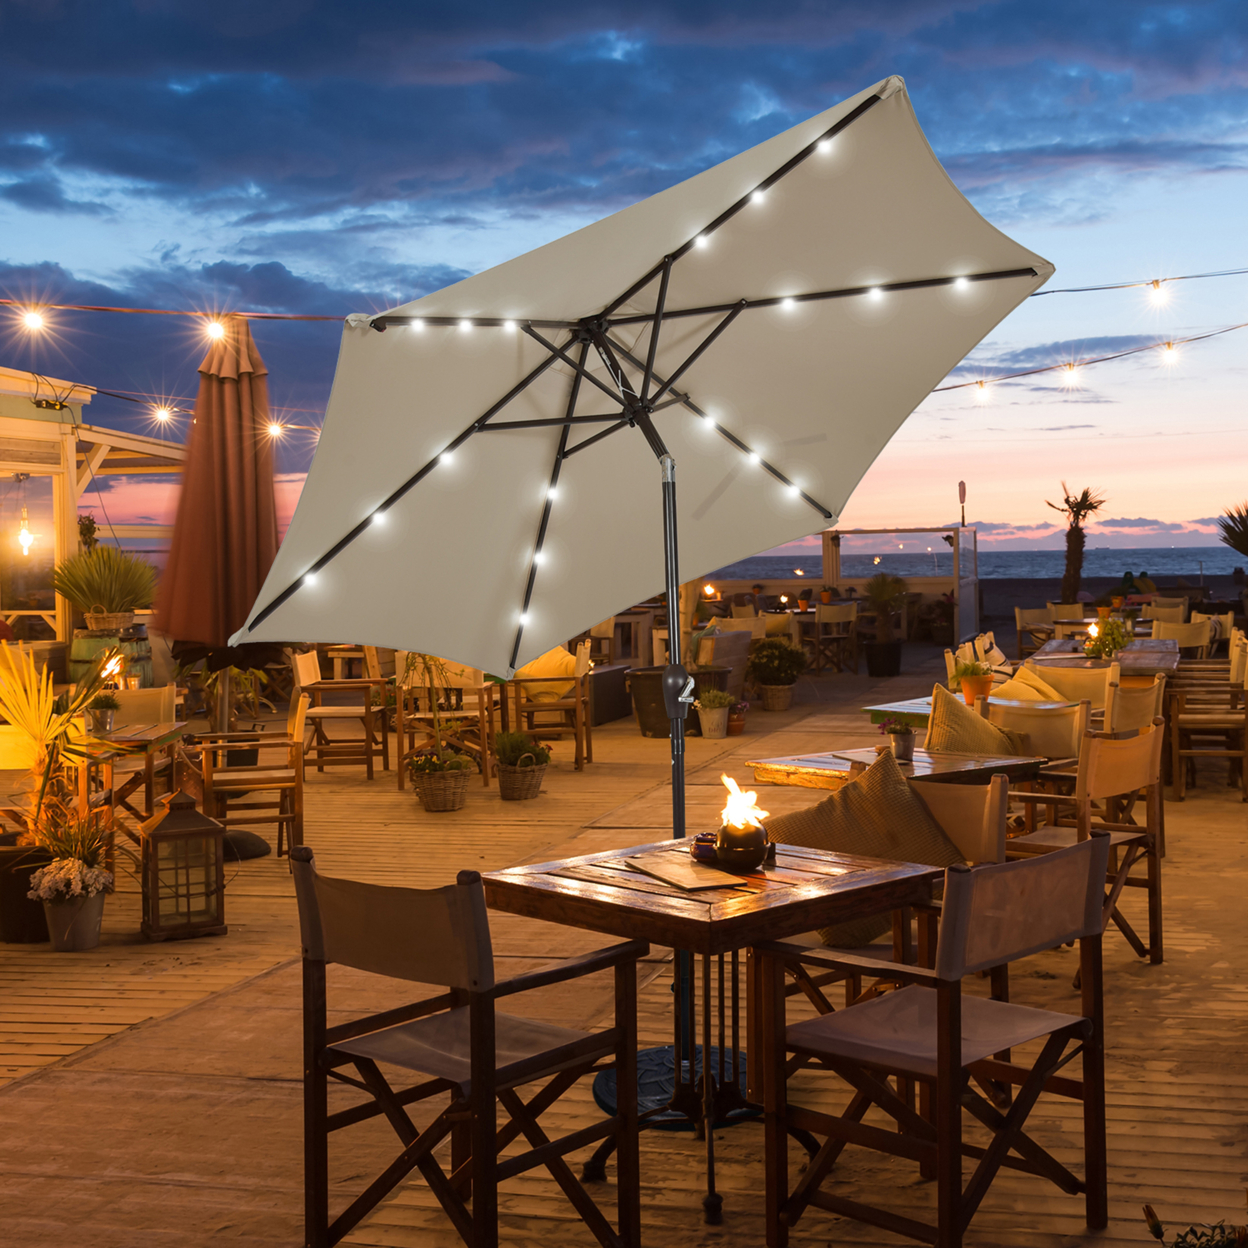 9 Ft Patio Table Market Umbrella Yard Outdoor W/ Solar LED Lights - Tan